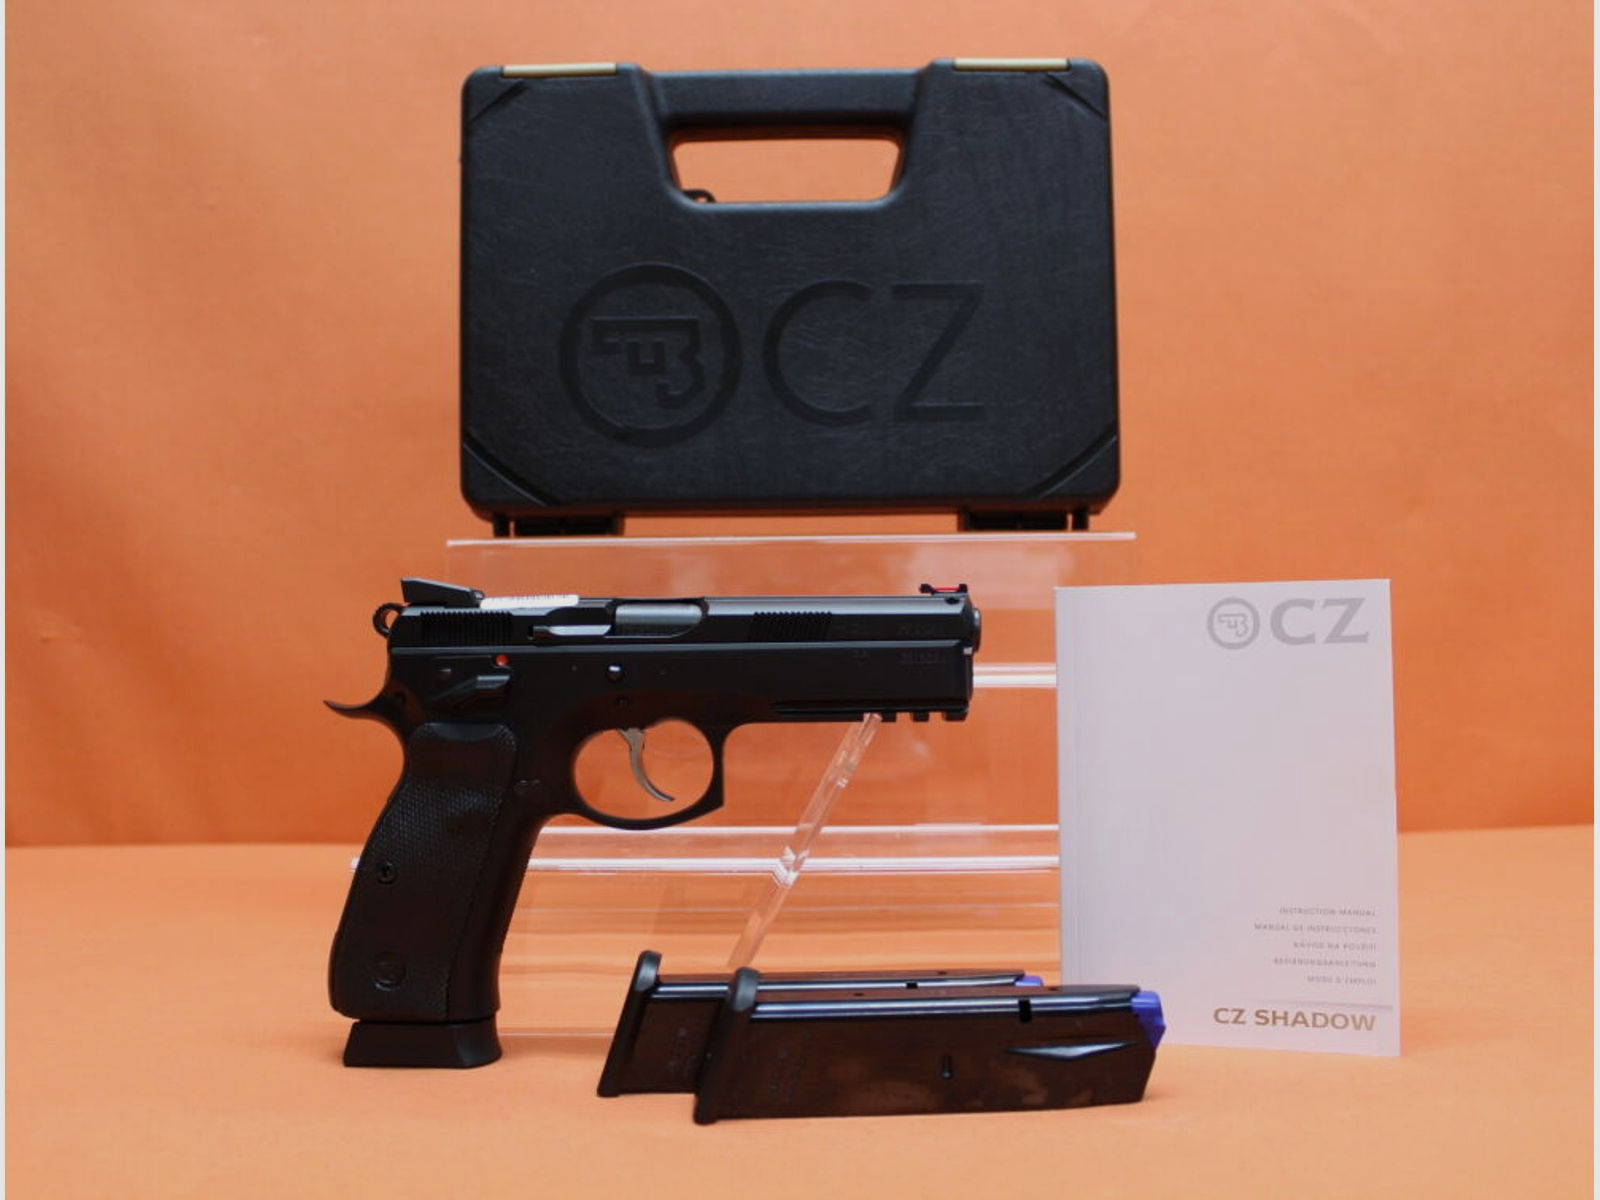 CZUB	 Ha.Pistole 9mmLuger CZUB CZ 75 SP-01 SHADOW 116mm Lauf/Fiber-Leuchtkorn/3 Magazine (9mmPara/9x19)